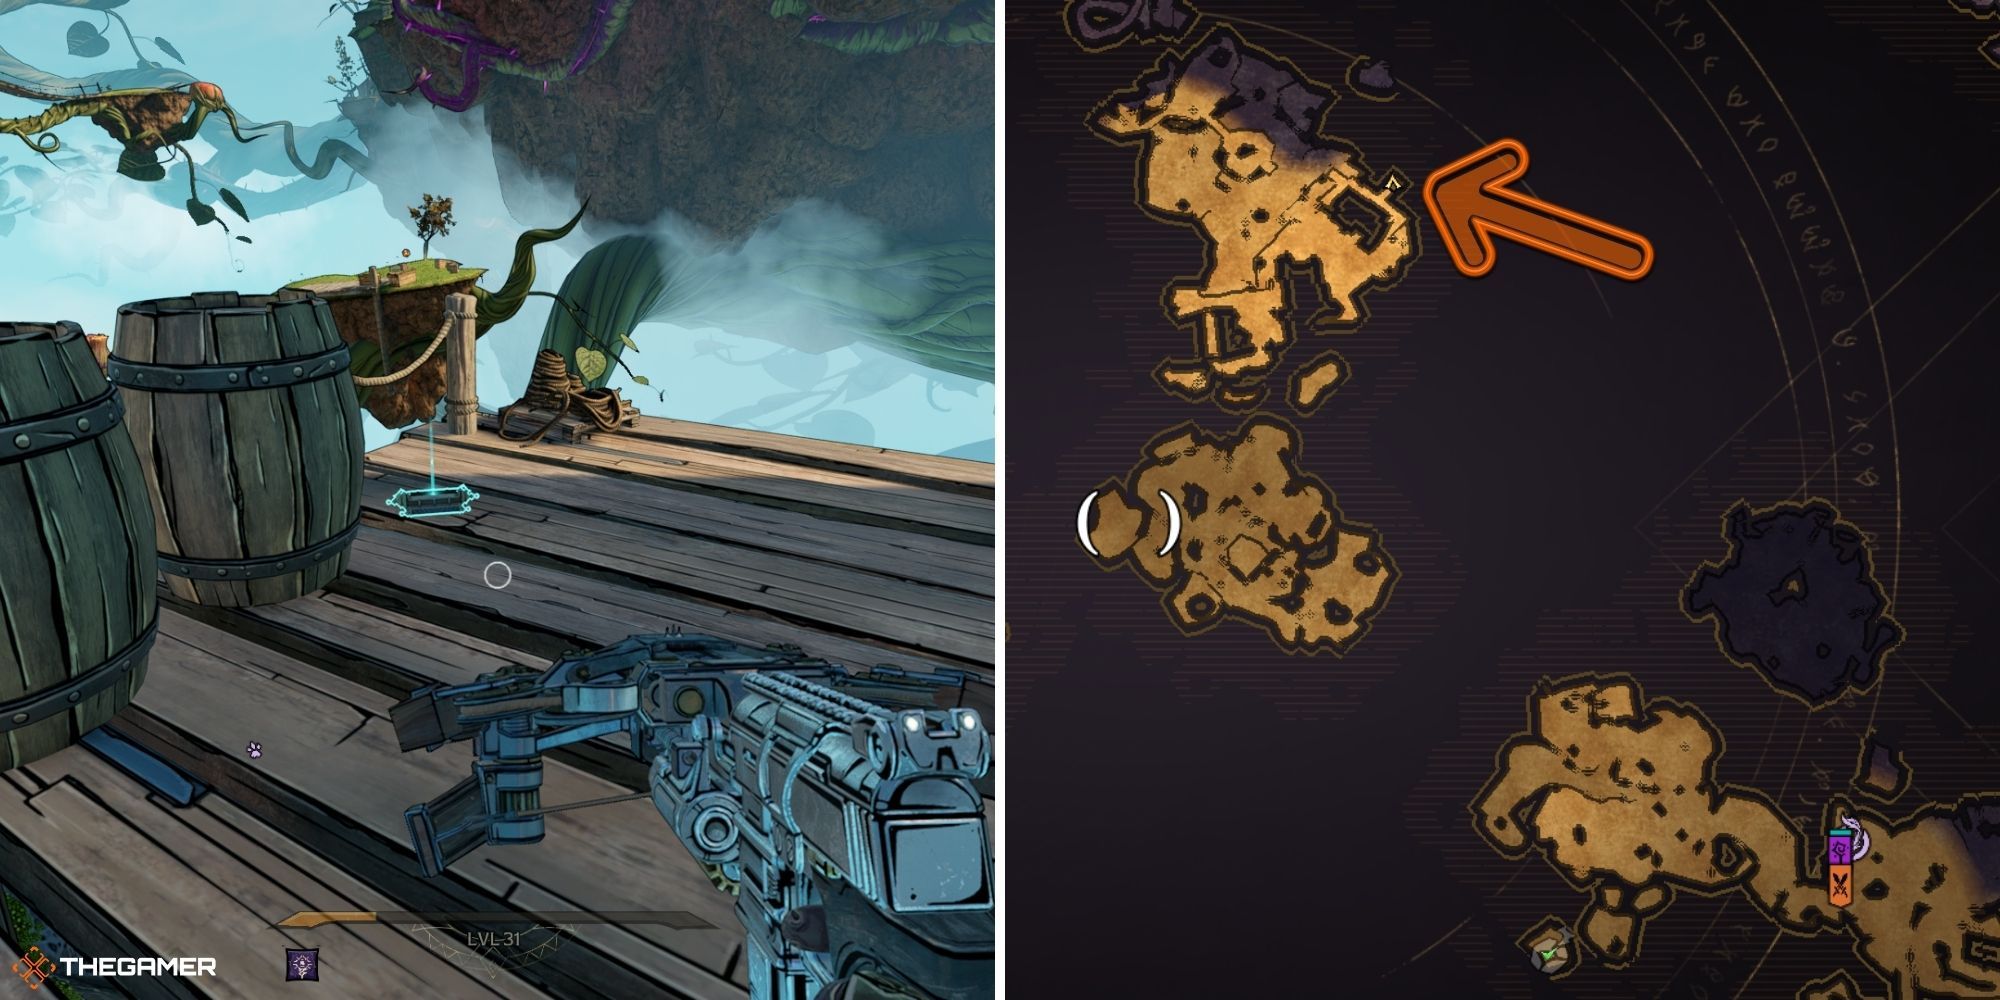 tiny tina's wonderlands - tangledrift - lore scroll on left, map right